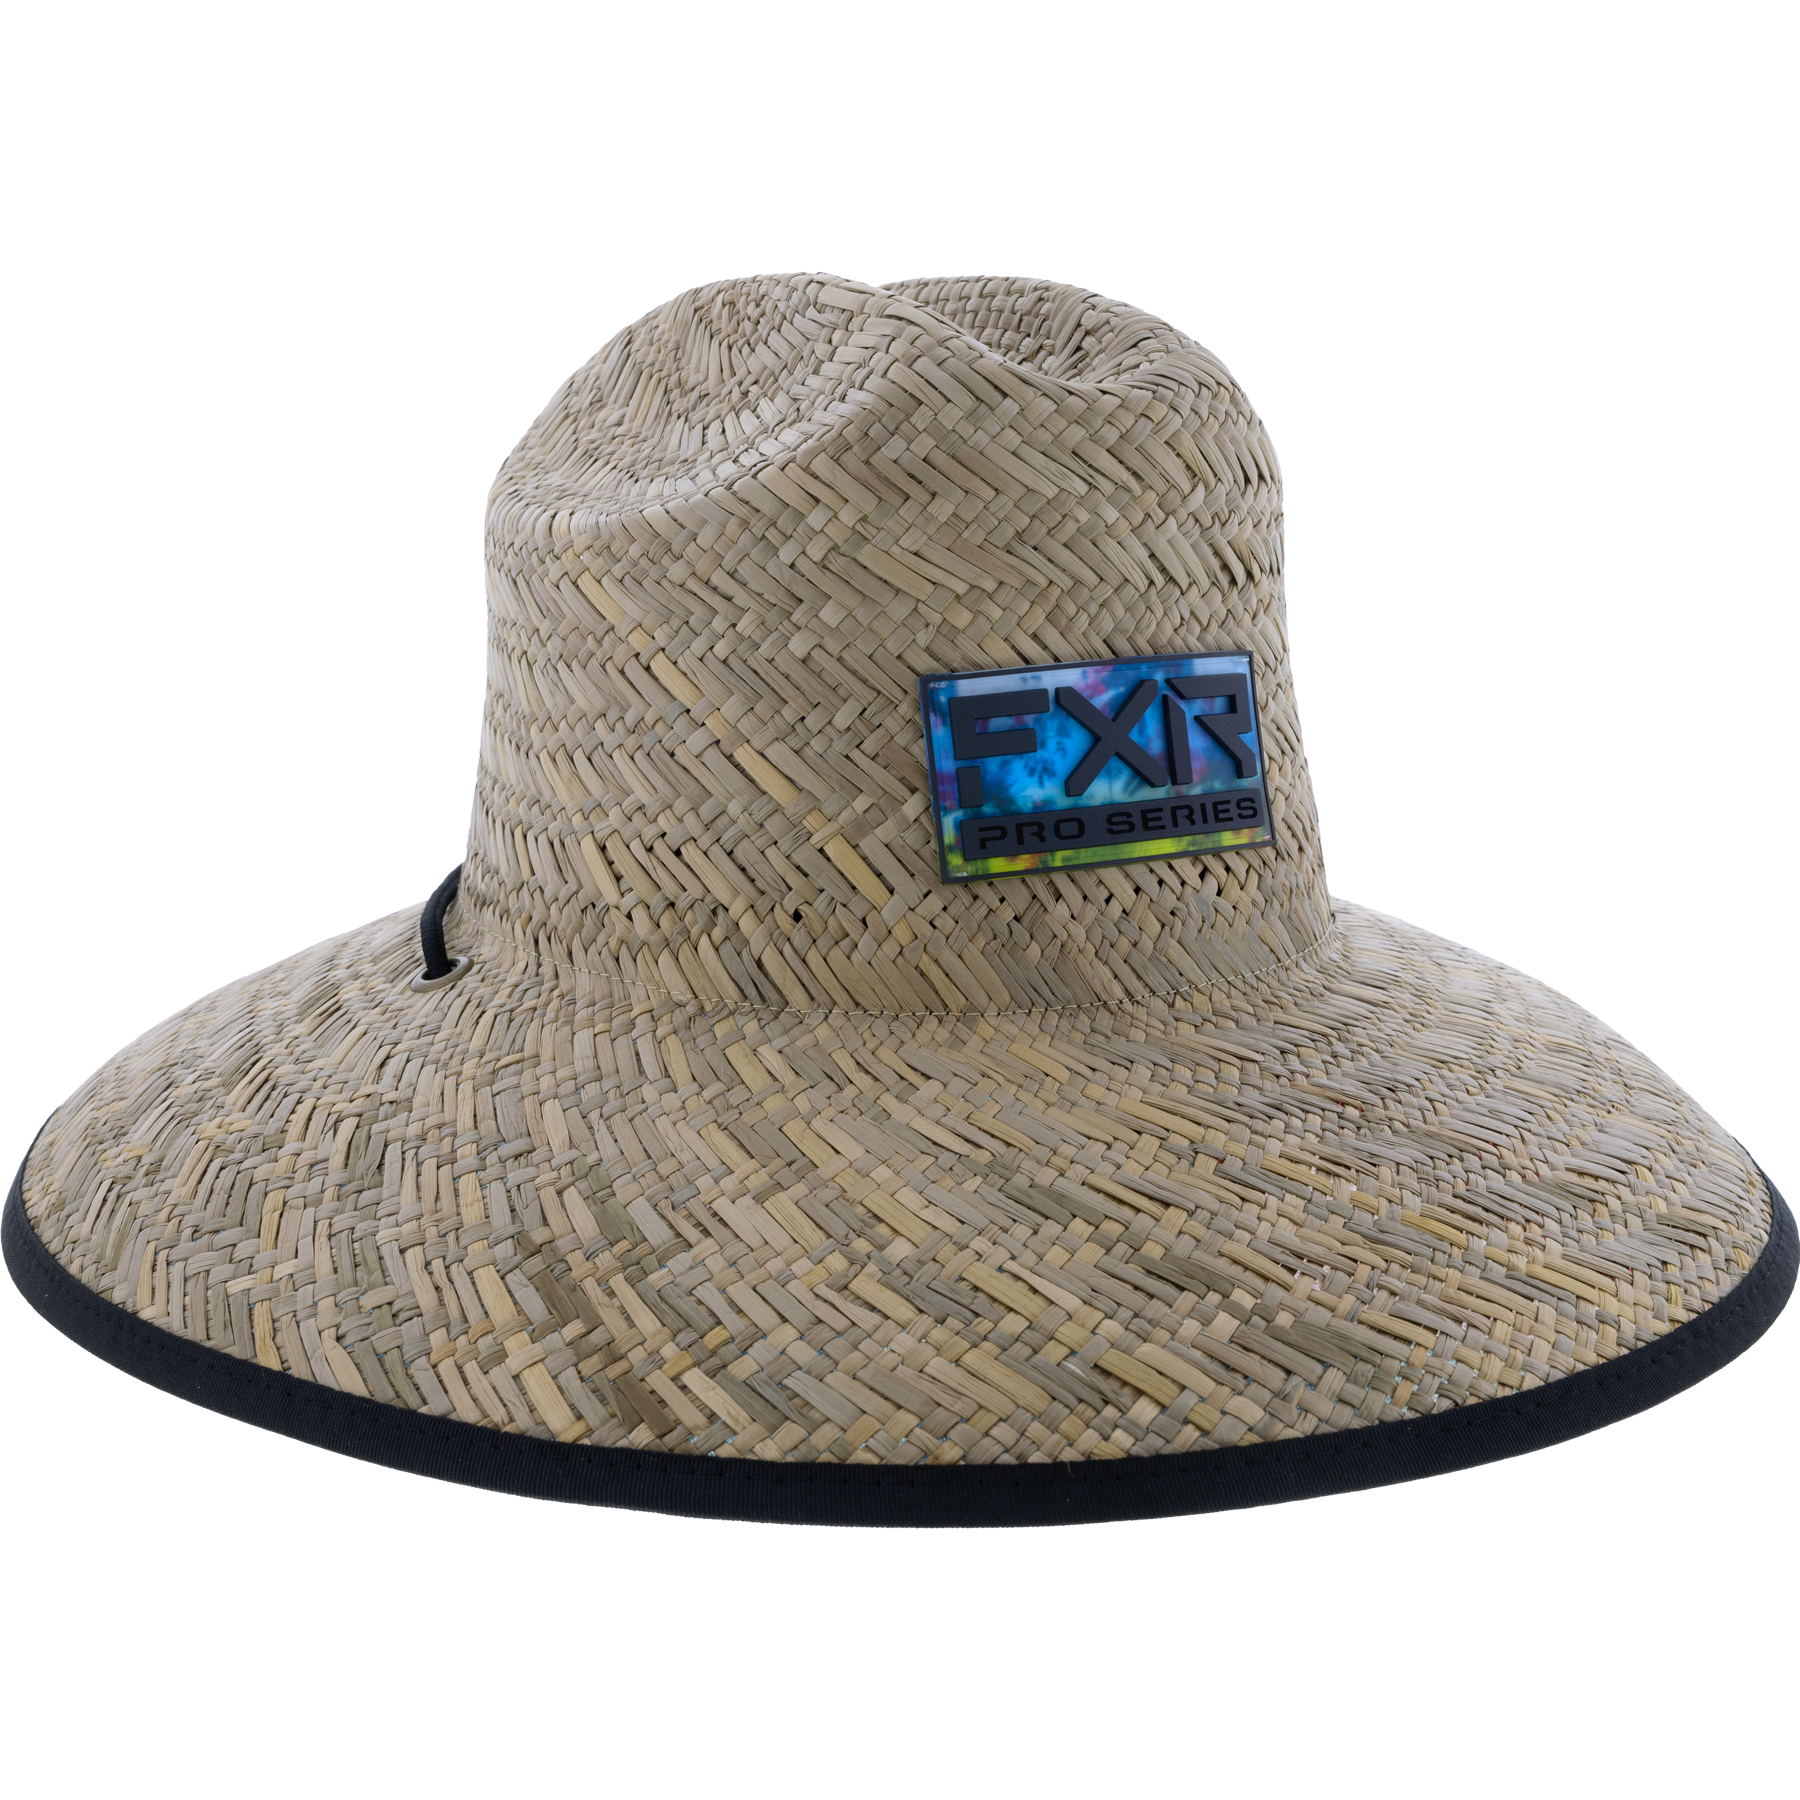 FXR Shoreside Straw Hat Tropical